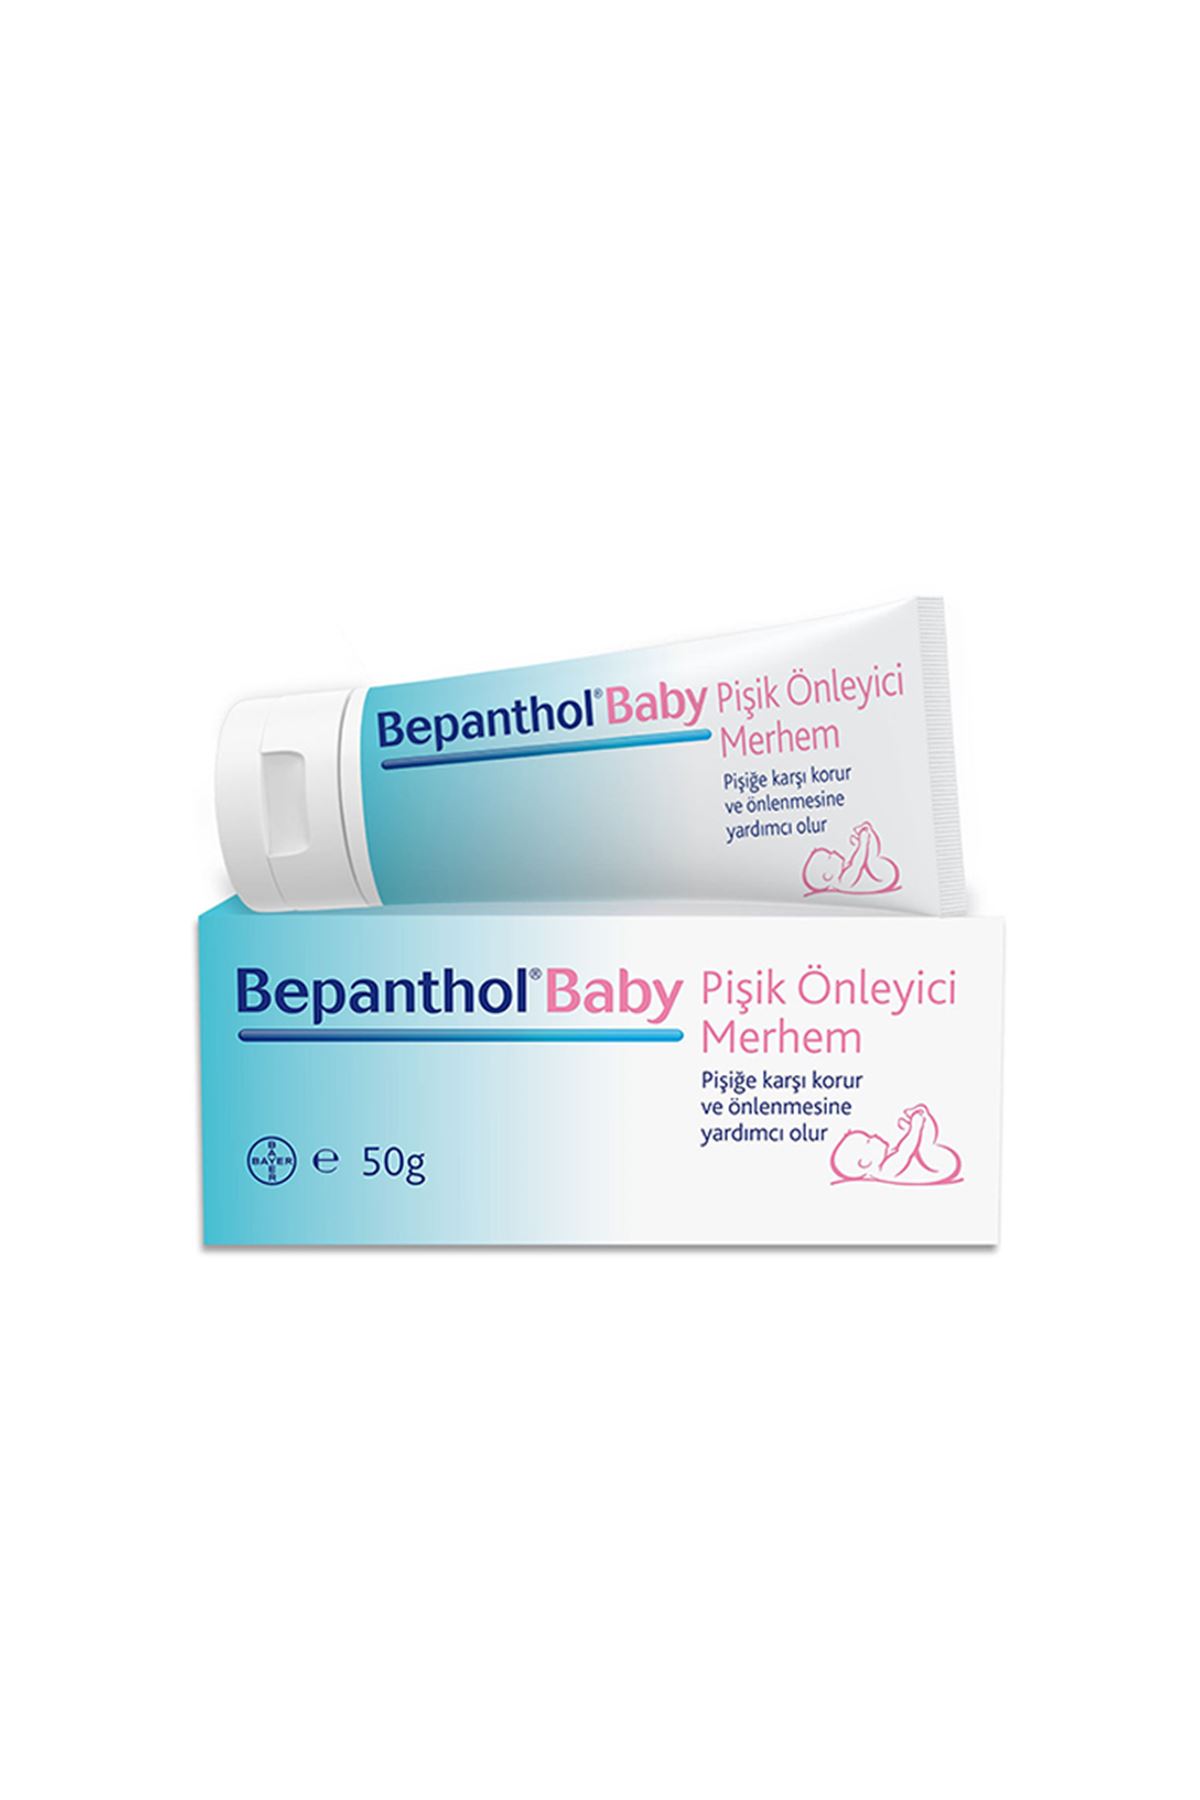 Bepanthol Baby Pişik Önleyici Merhem 50g